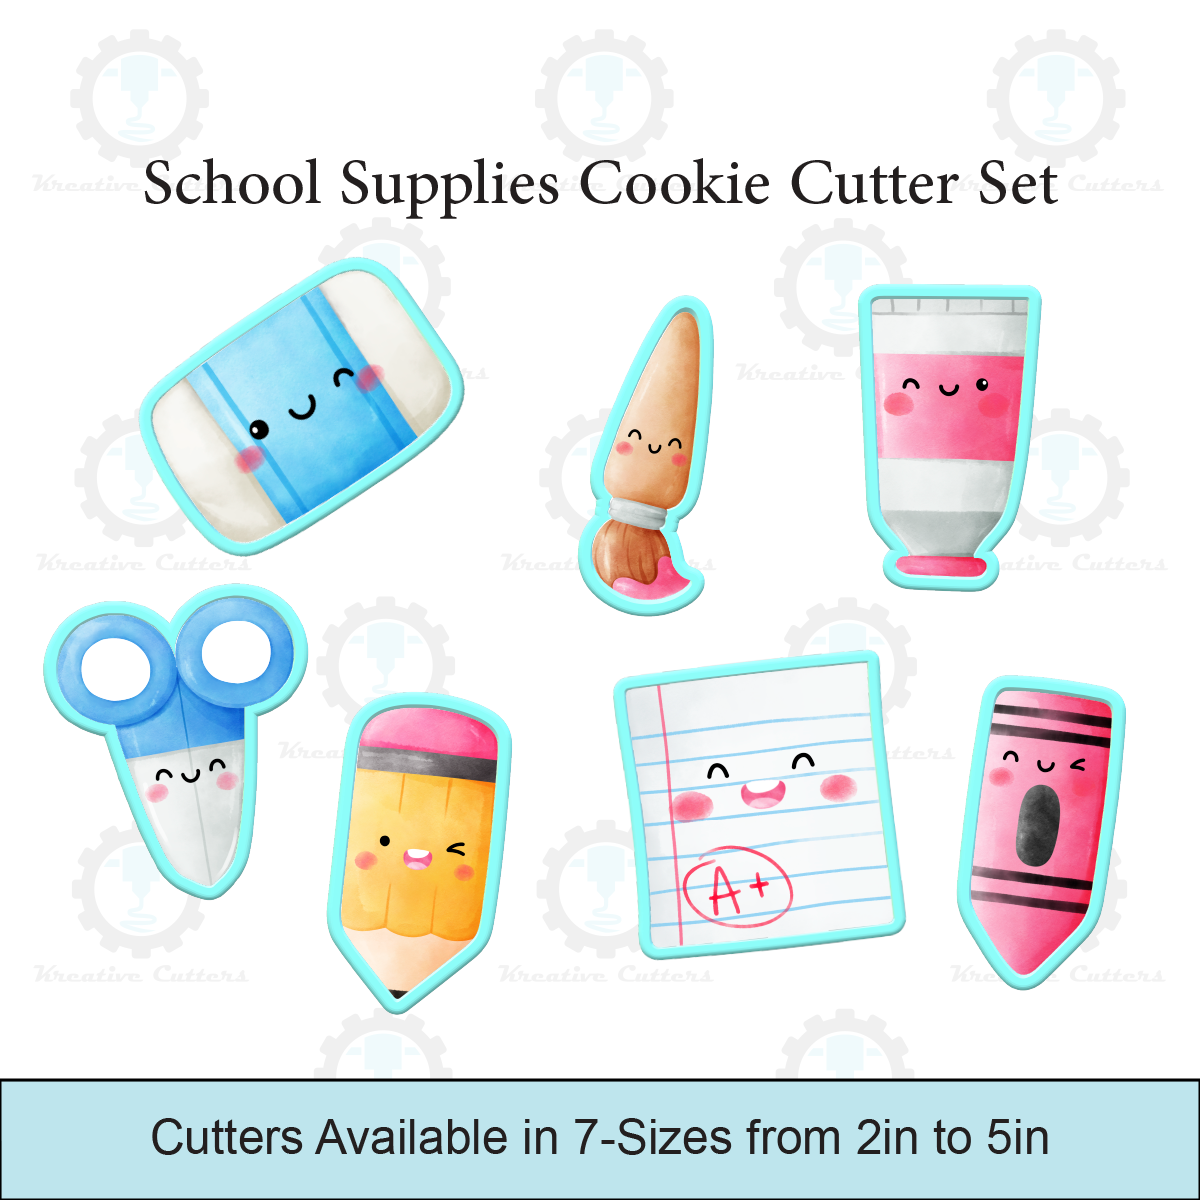 School Supplies Cookie Cutter Set